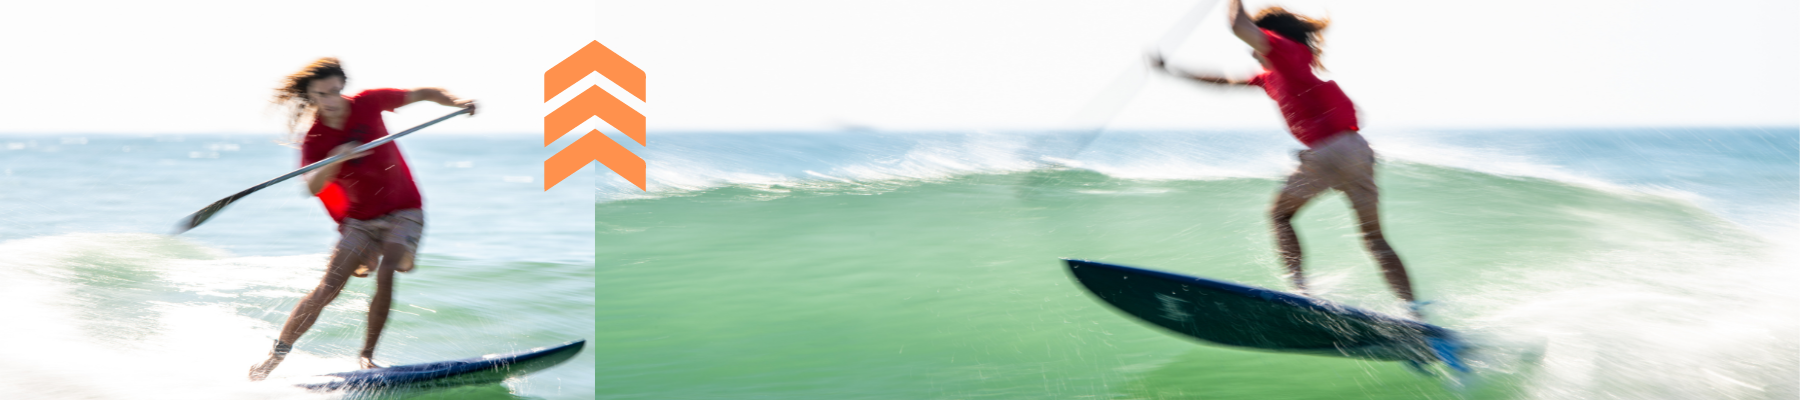 SUP SURF